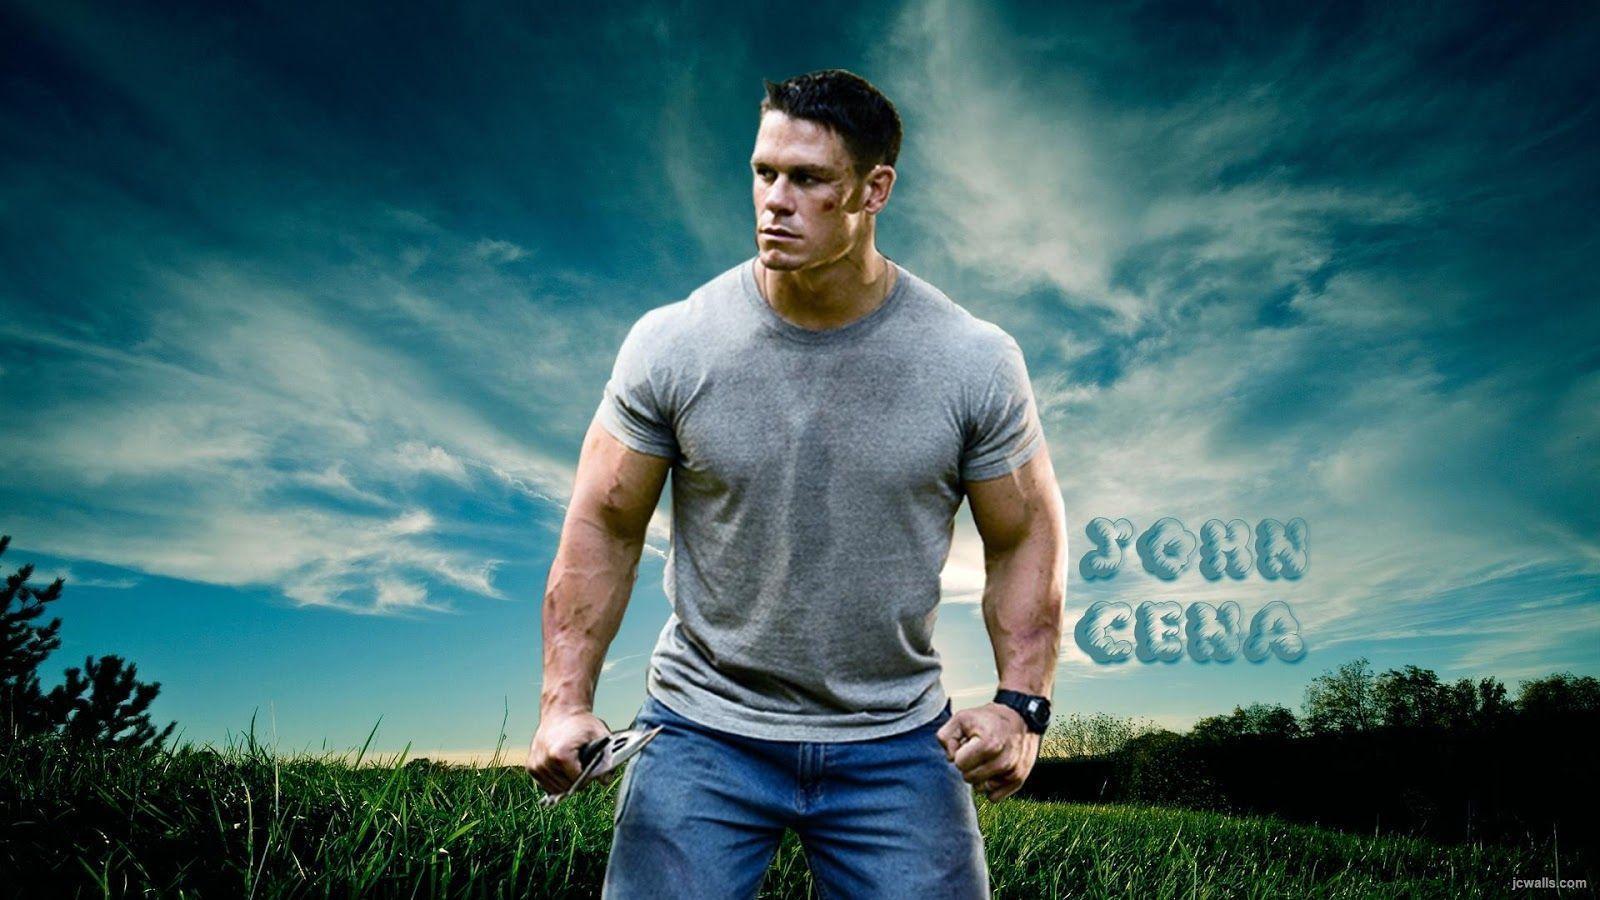 WWE Super Star John Cena Profile, Biography and Image